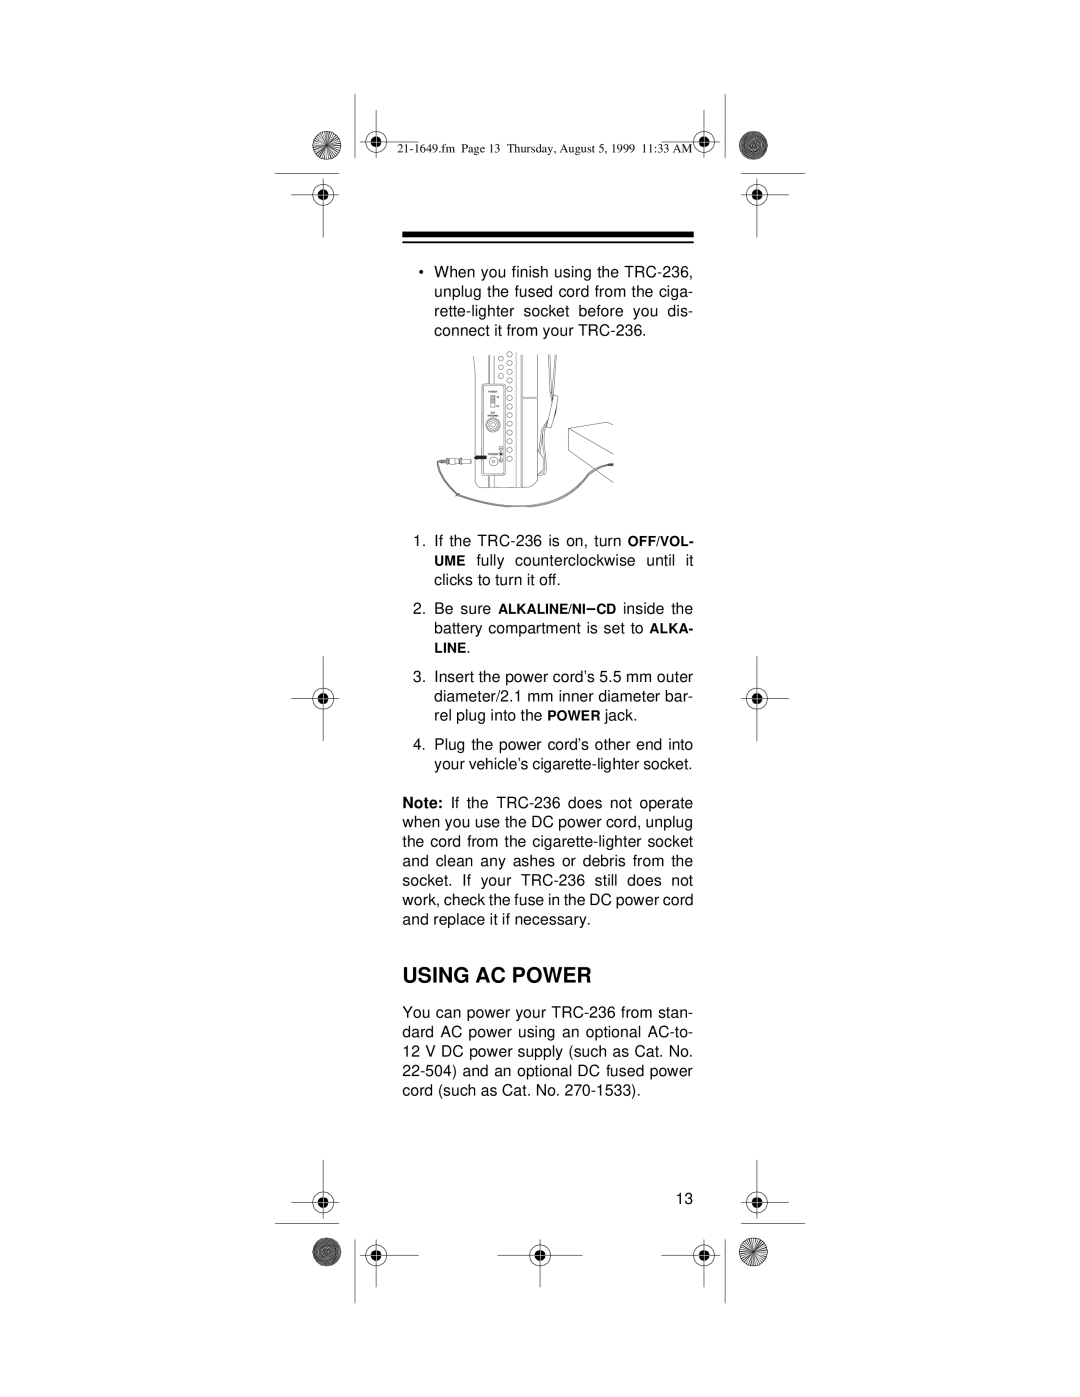 Radio Shack TRC-236 owner manual Using Ac Power 